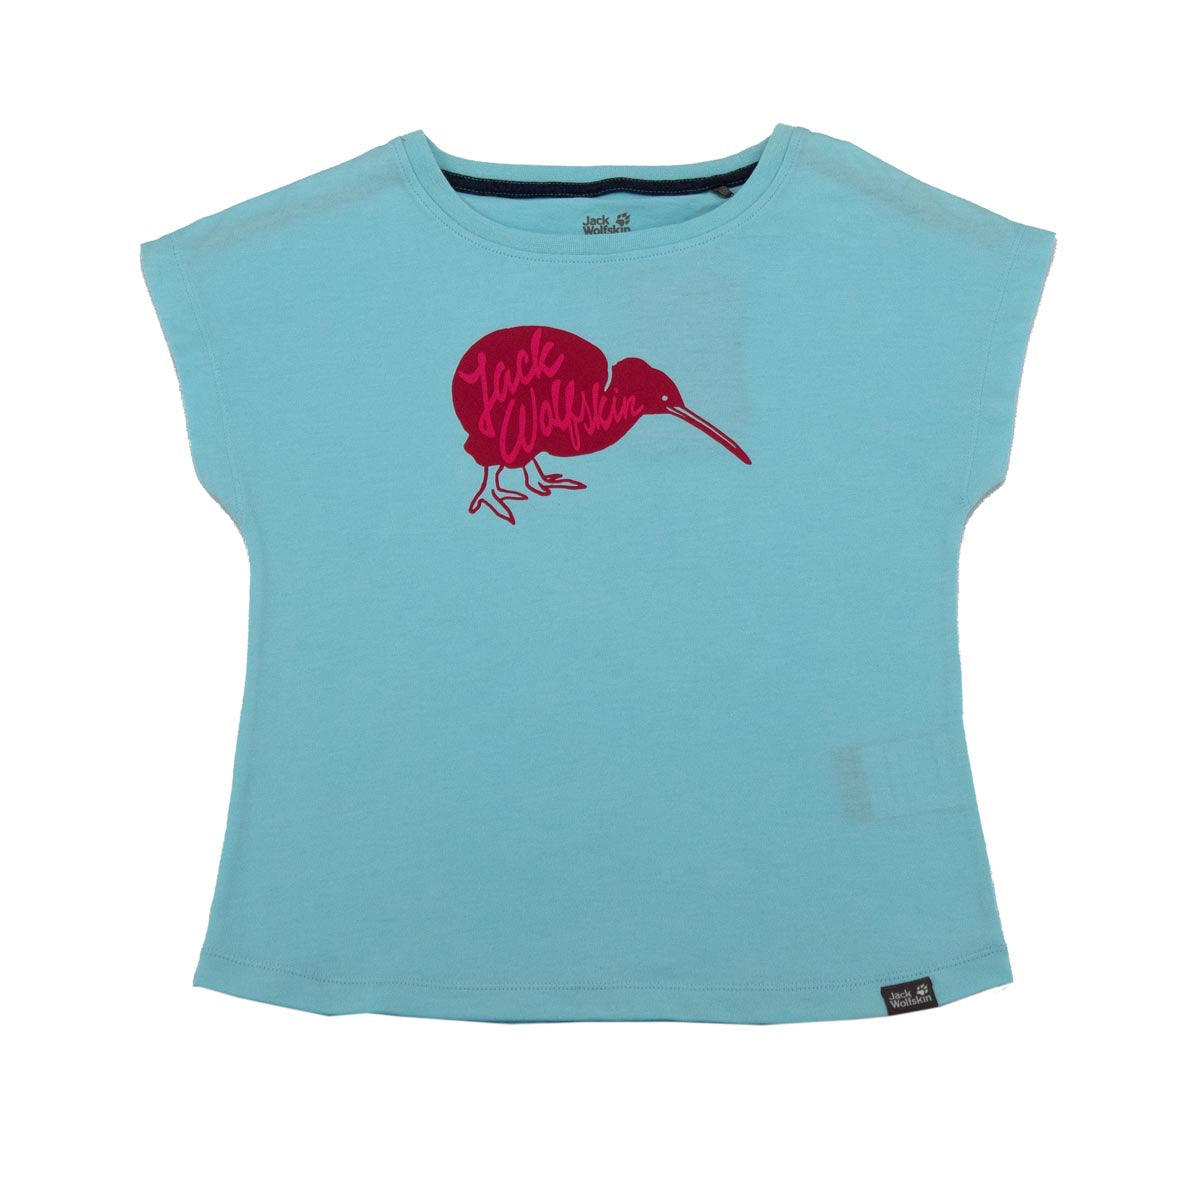 Jack Wolfskin Brand Tee Girl Kinder T-Shirt kurzarm Shirt Baumwolle 1607261-1094 128